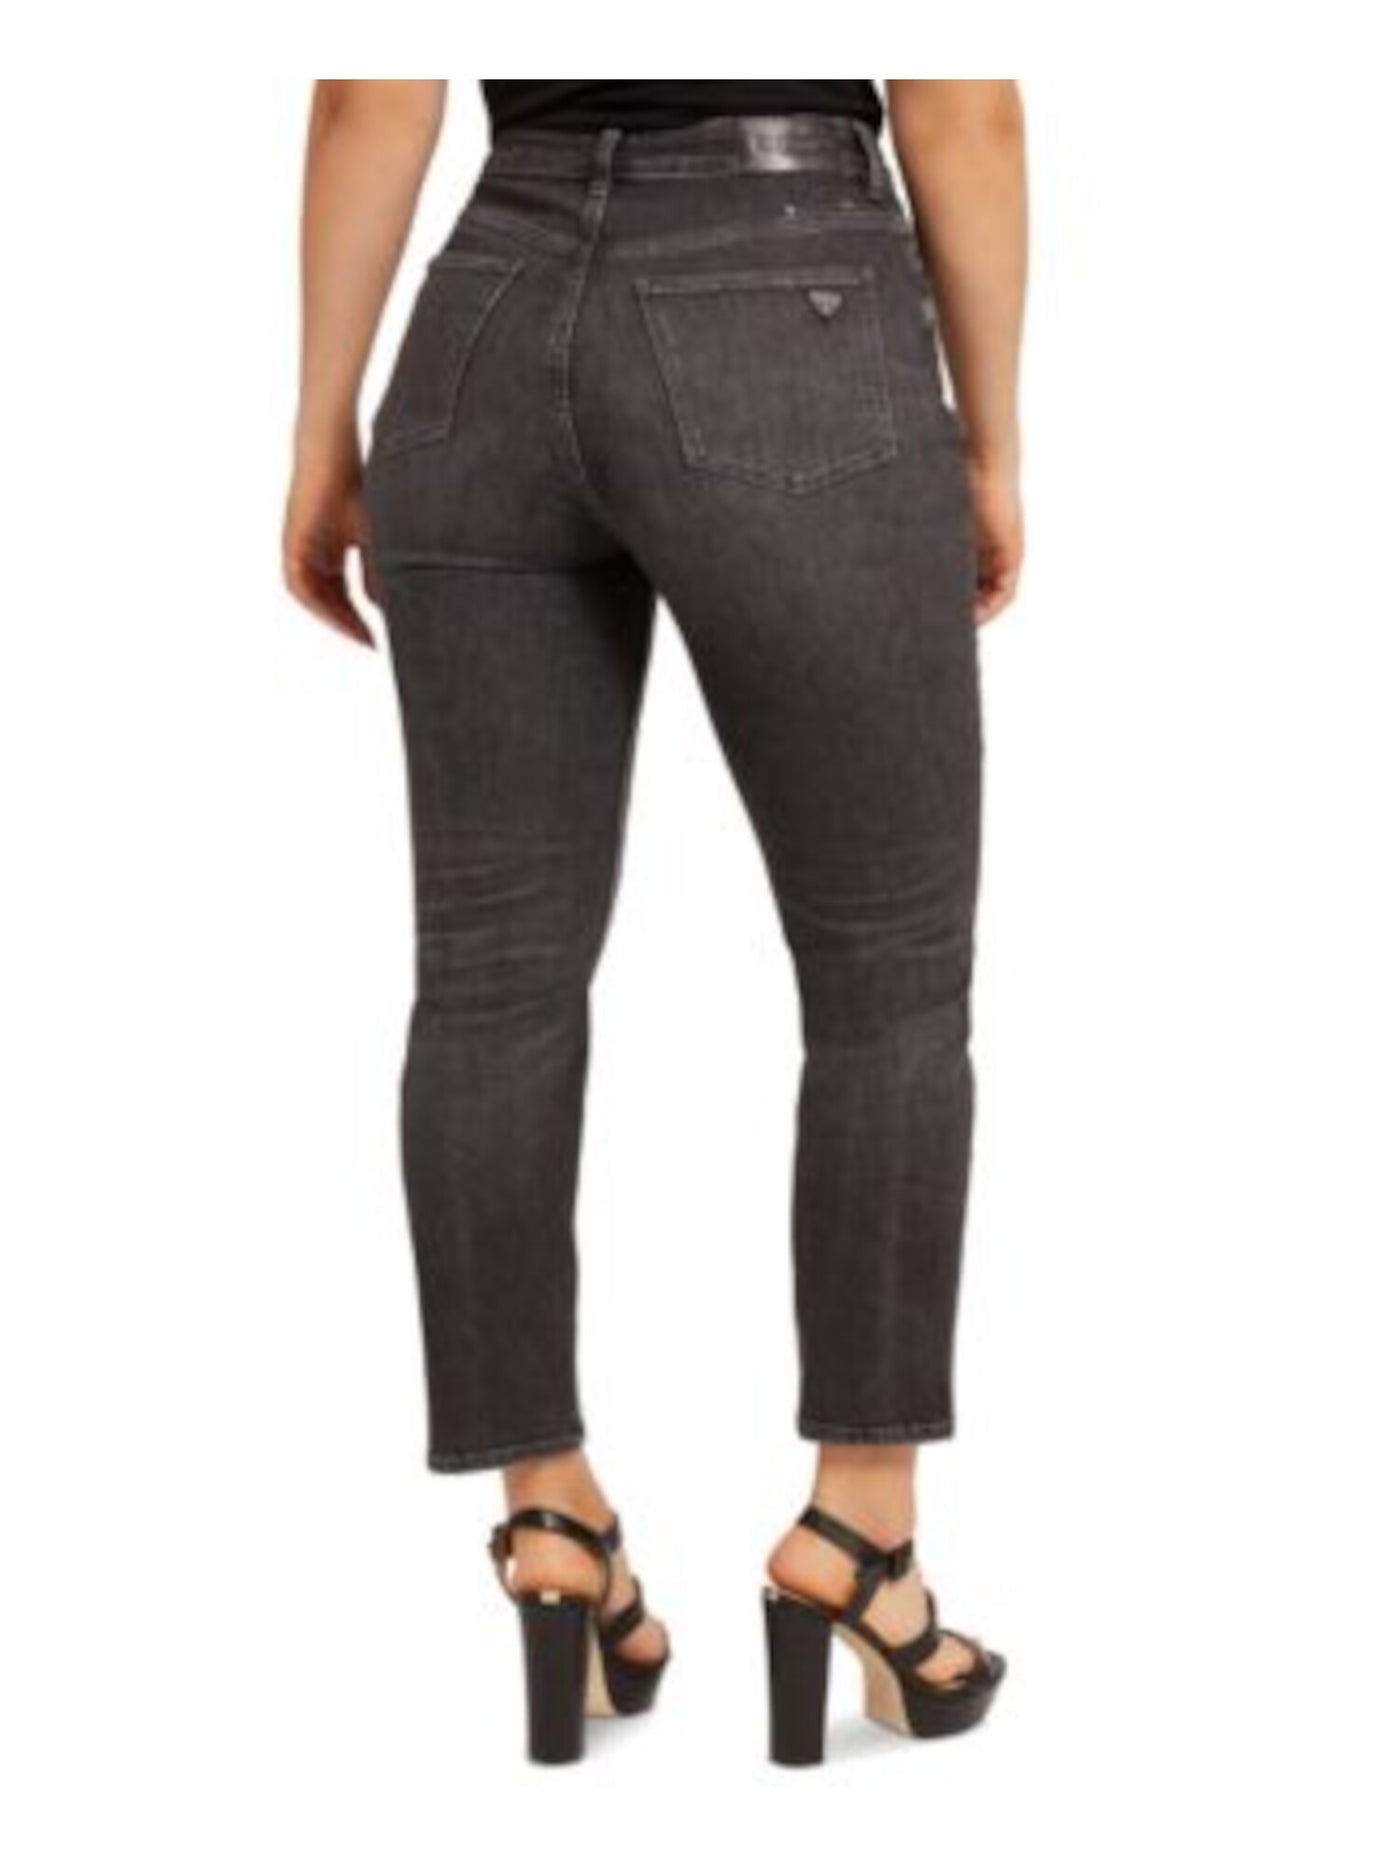 GUESS Womens Black Denim Distressed Pocketed Zippered High Waist Jeans 30